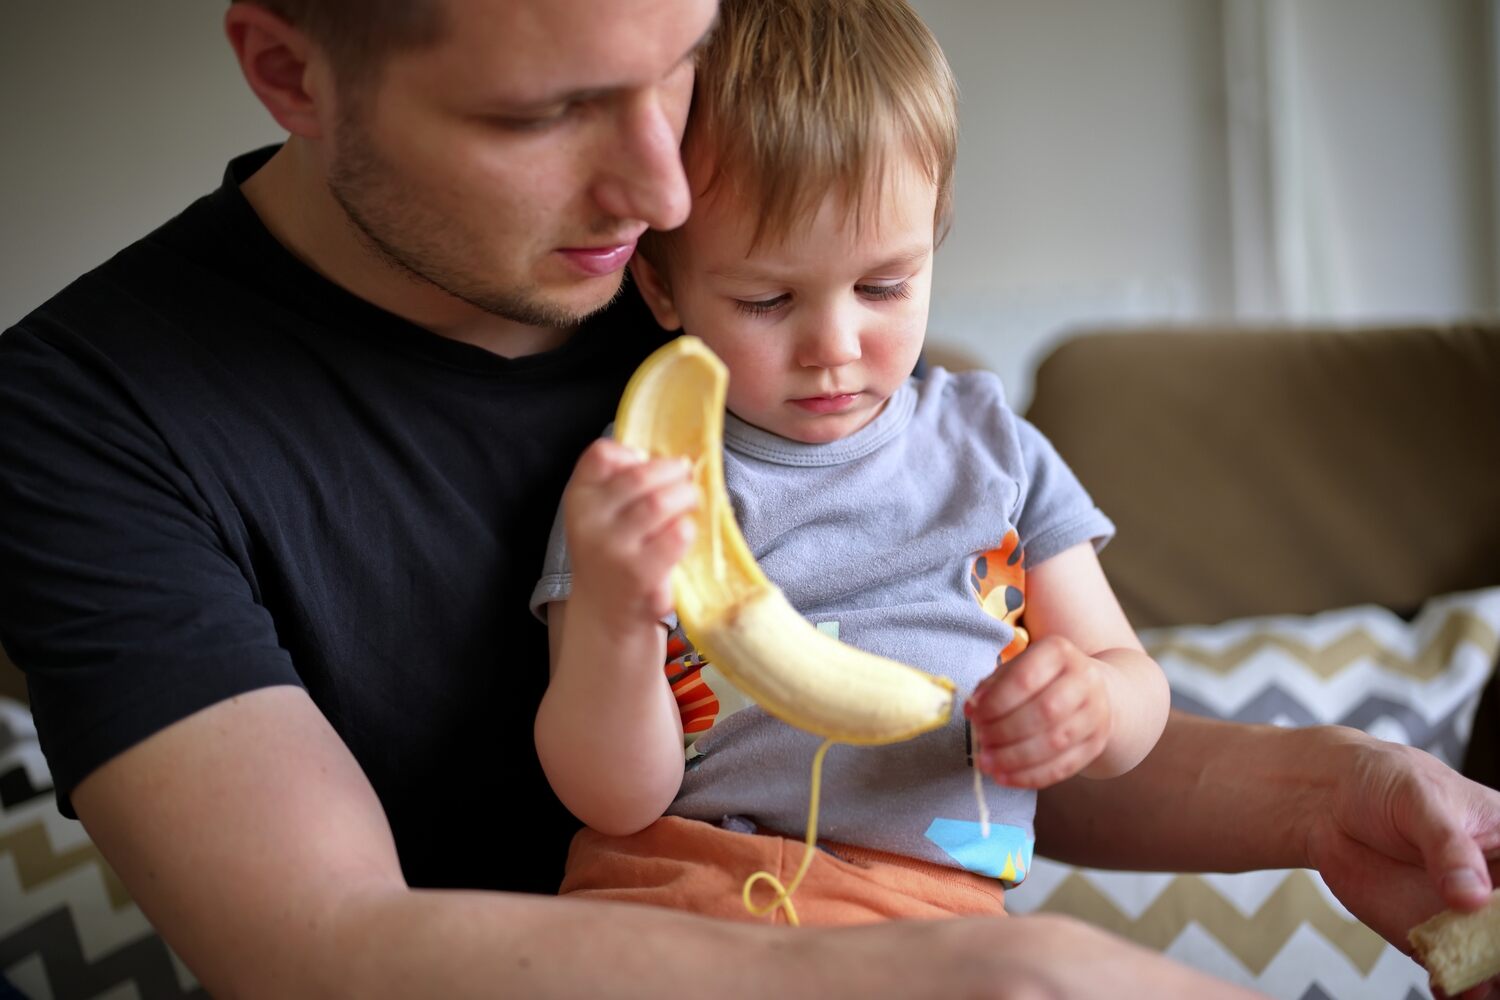 Let your toddler peel banana